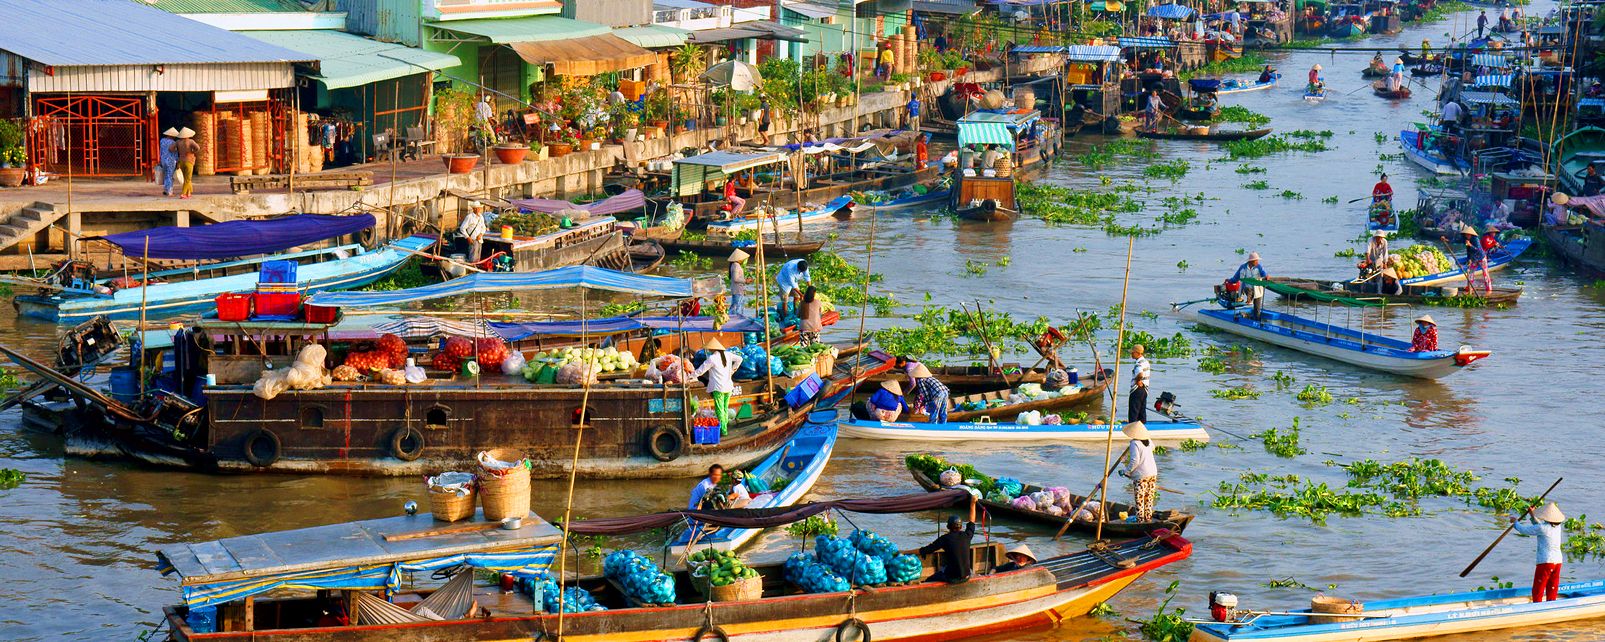 Marchés flottants du delta du mékong : - Vietnam